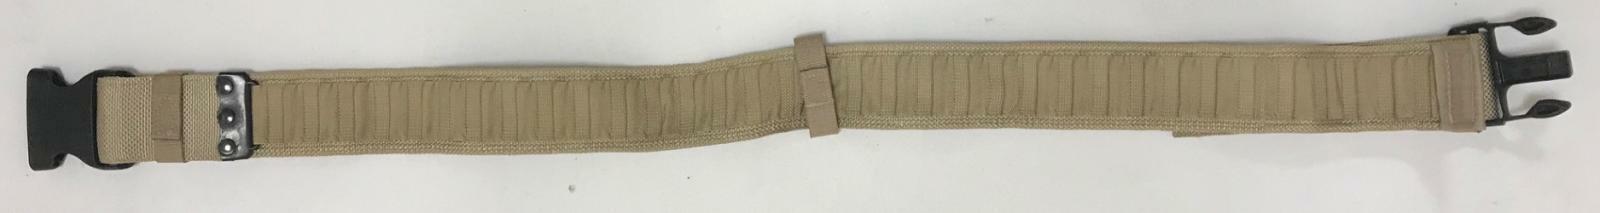 British army surplus DESERT plce combat webbing pistol belt 